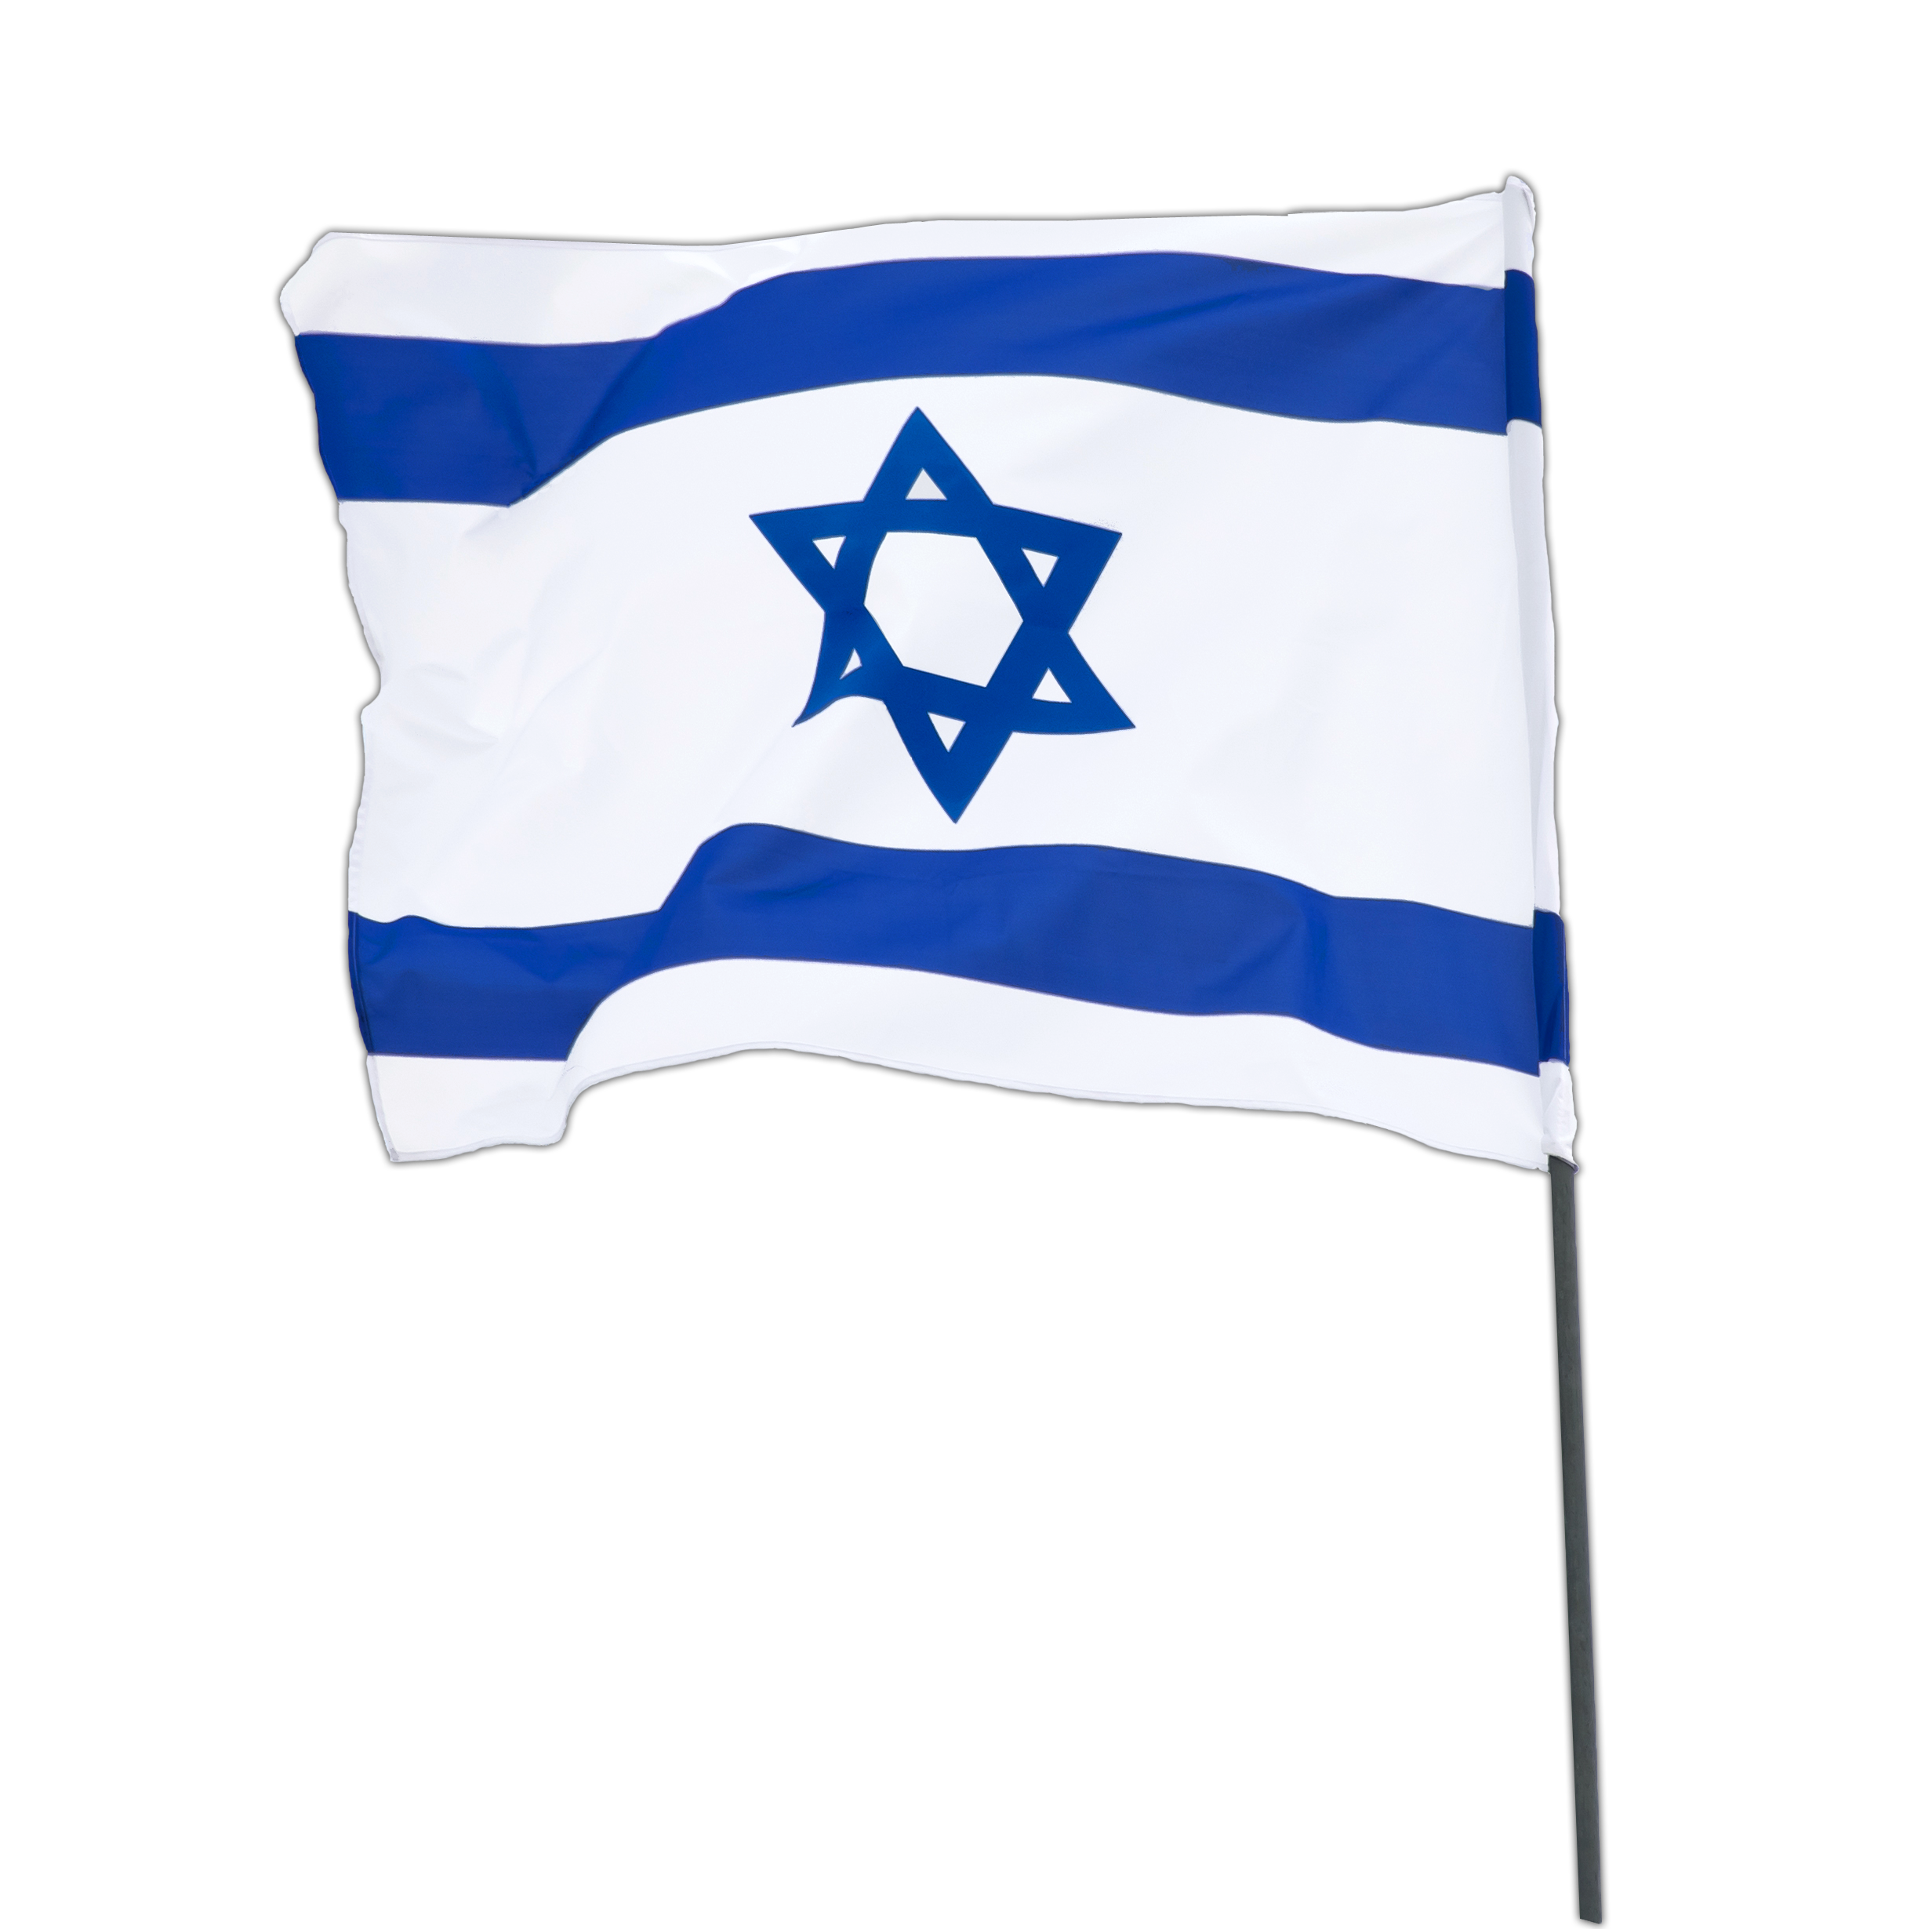 Israel Flag Download Free Image PNG Image